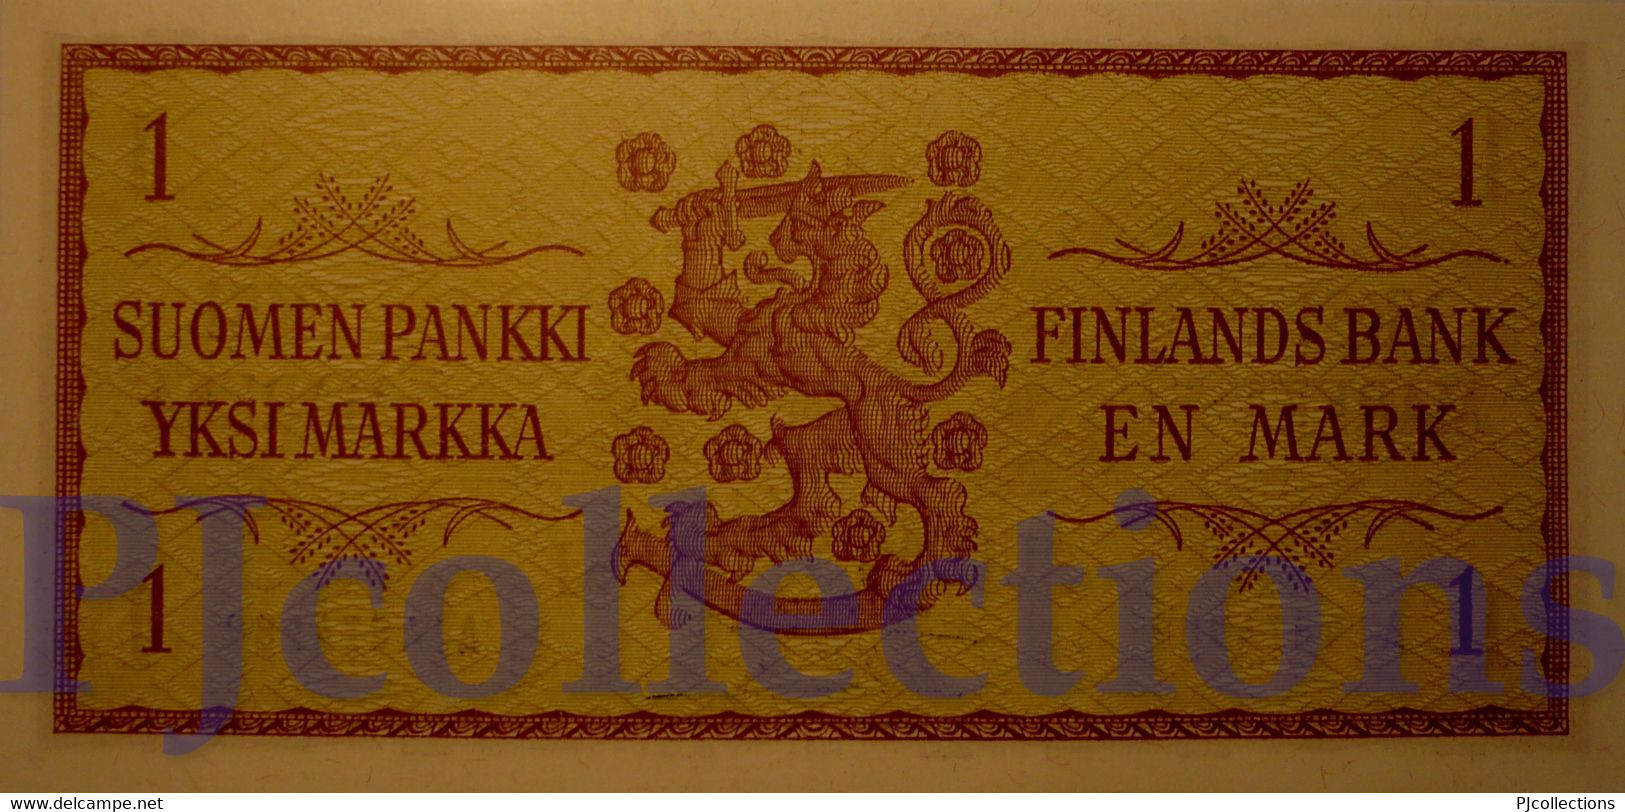 FINLAND 1 MARKKA 1963 PICK 98 UNC - Finlande